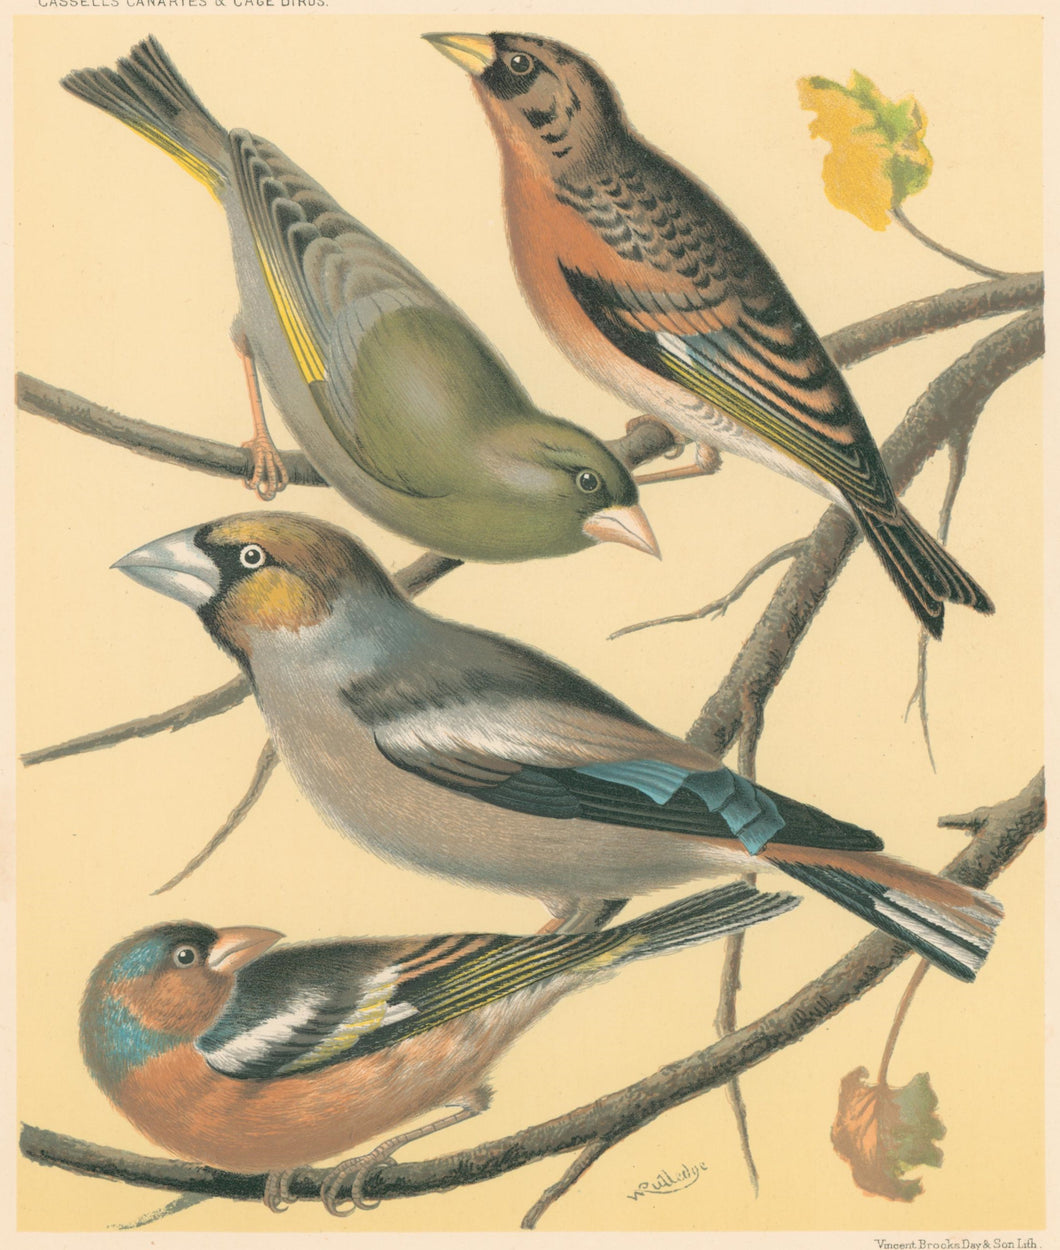 Rutledge, W. “Greenfinch, Mountain Finch, Hawfinch, Chaffinch